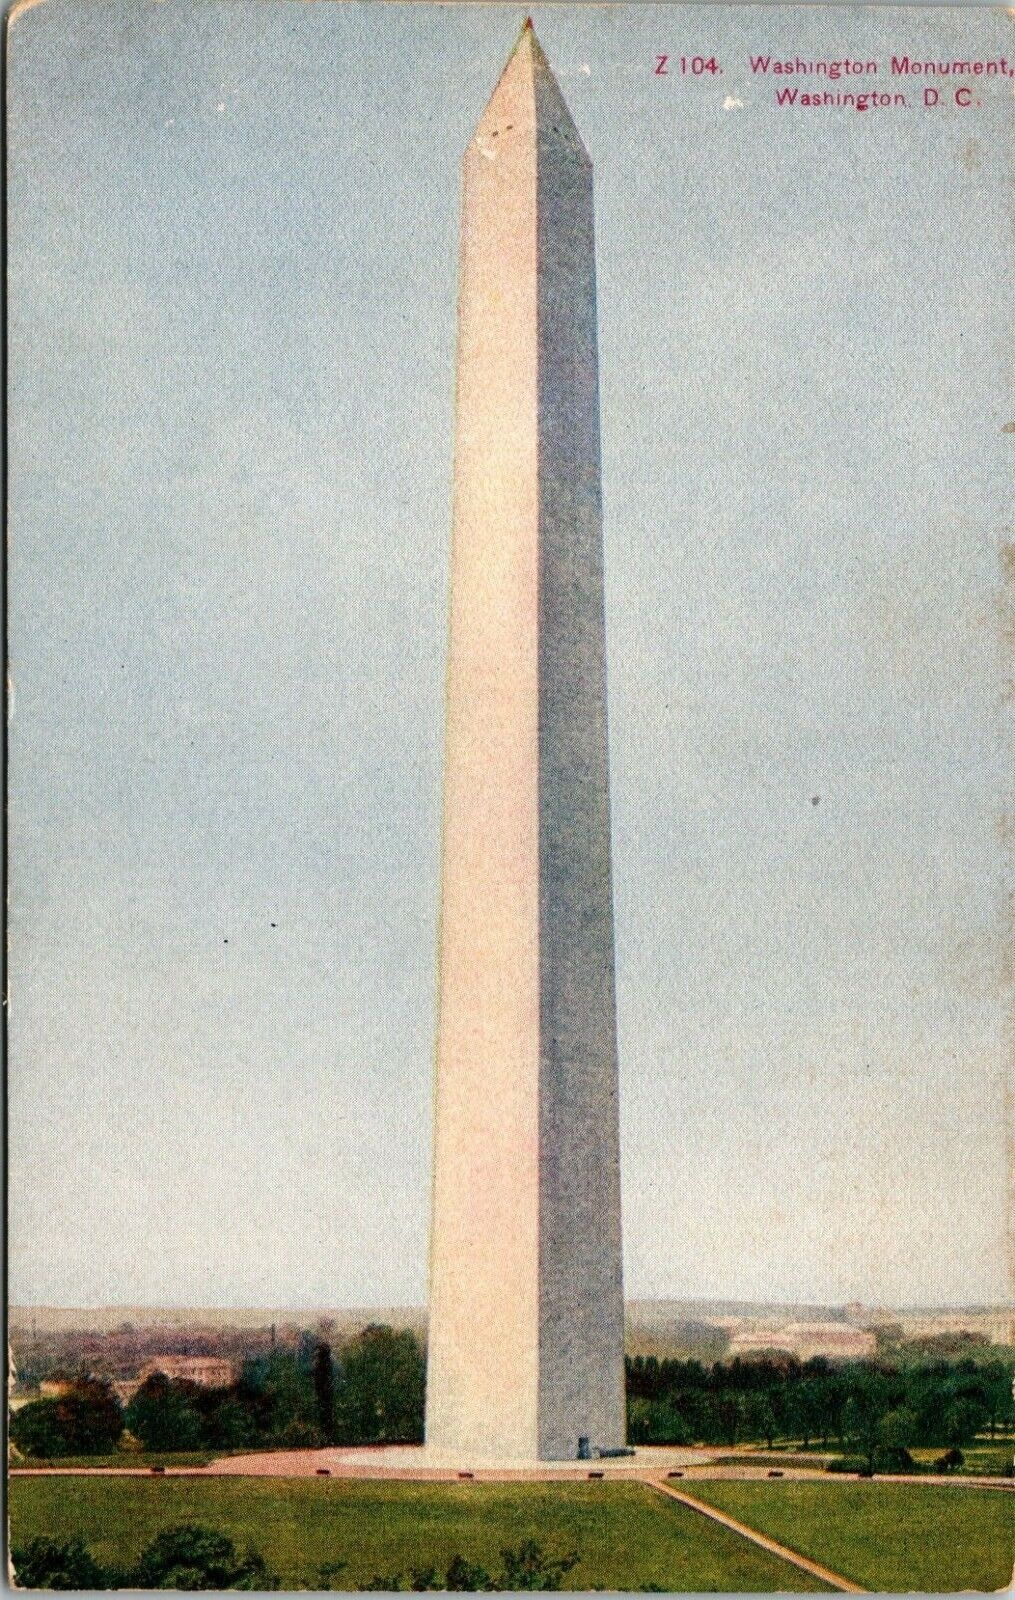 THE WASHINGTON MONUMENT EARLY VIEW REAL PHOTO POSTCARD WASHINGTON DC 1910